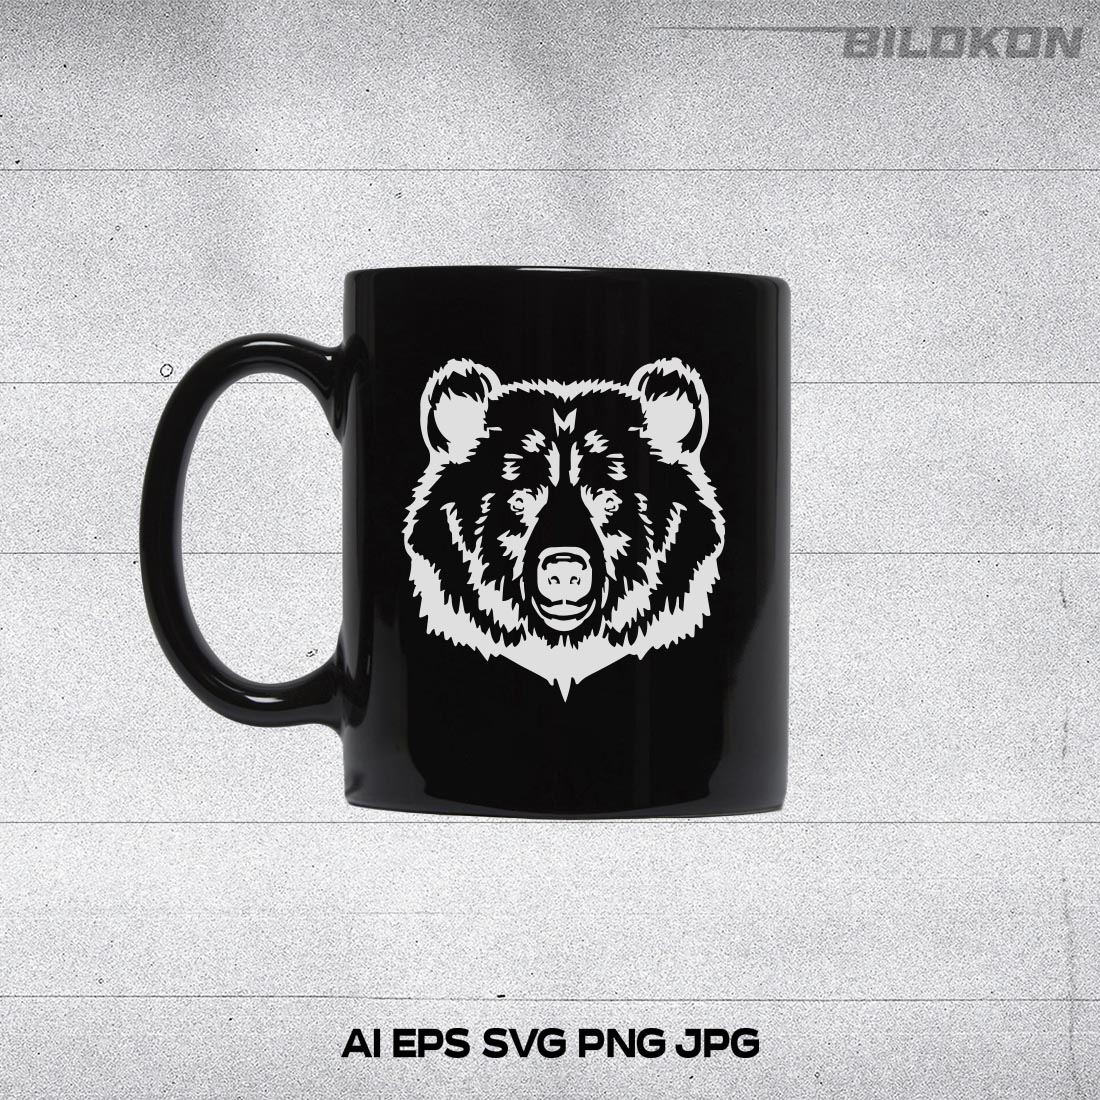 Black coffee mug with a bear on it.